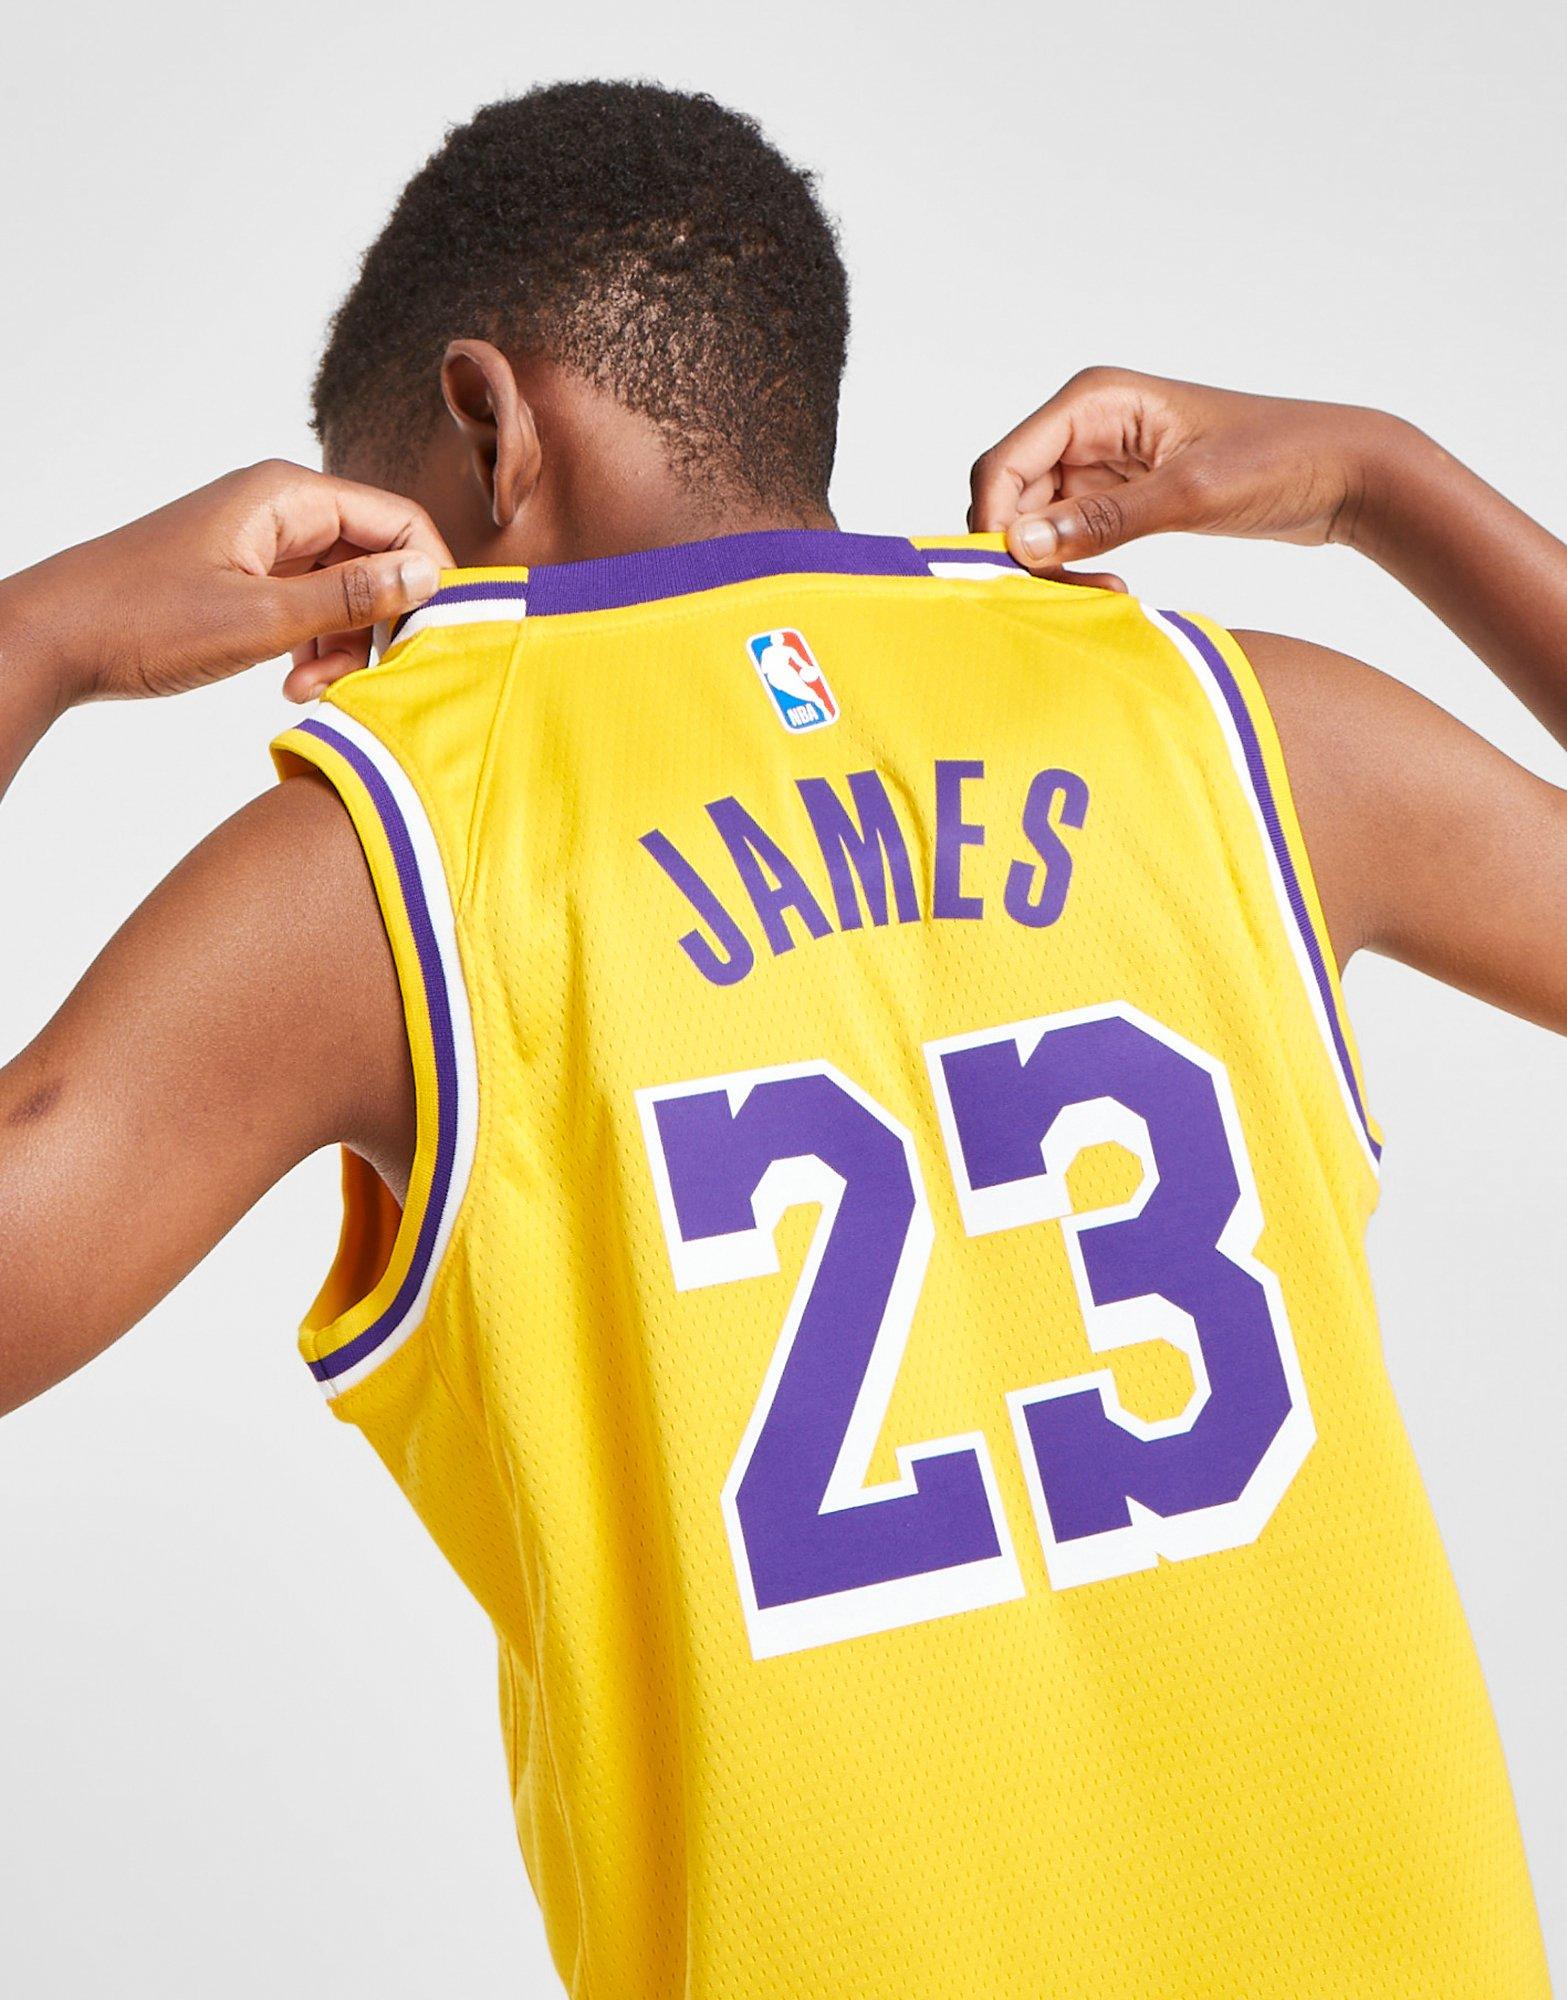 Buy Mx Clothing co Basketball Jersey, Lakers Lebron James #23